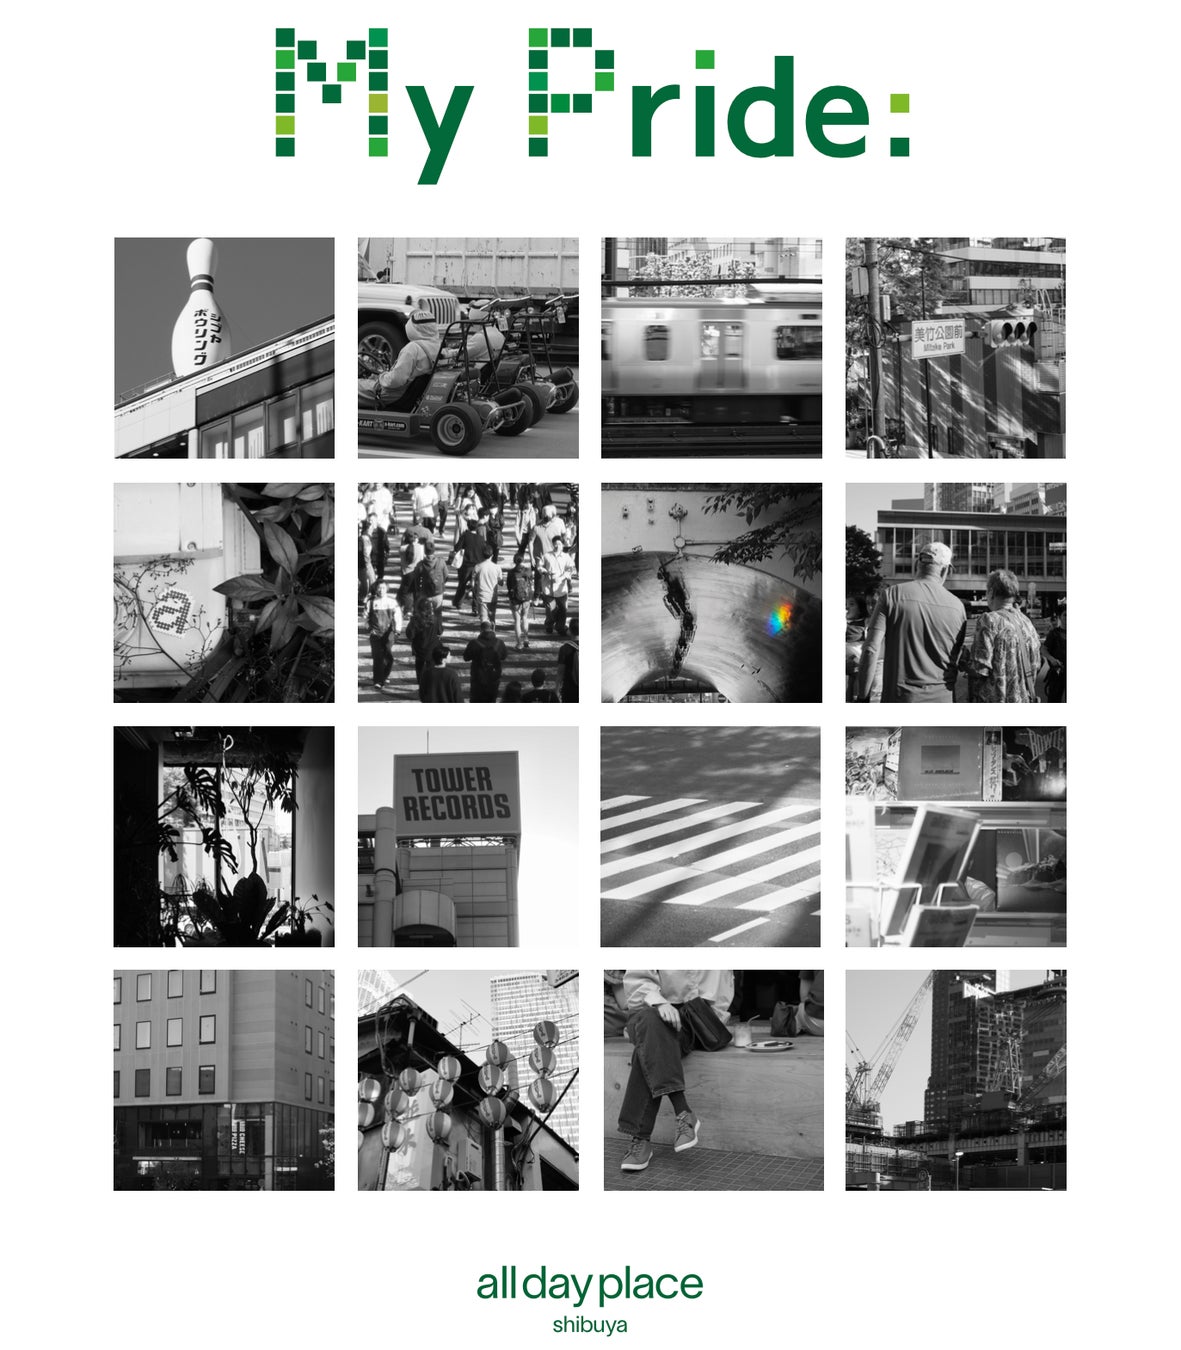 【all day place shibuya】Pride Month(プライド月間)の6月に、自分らしさを表現するイベント「My Pride：」を開催